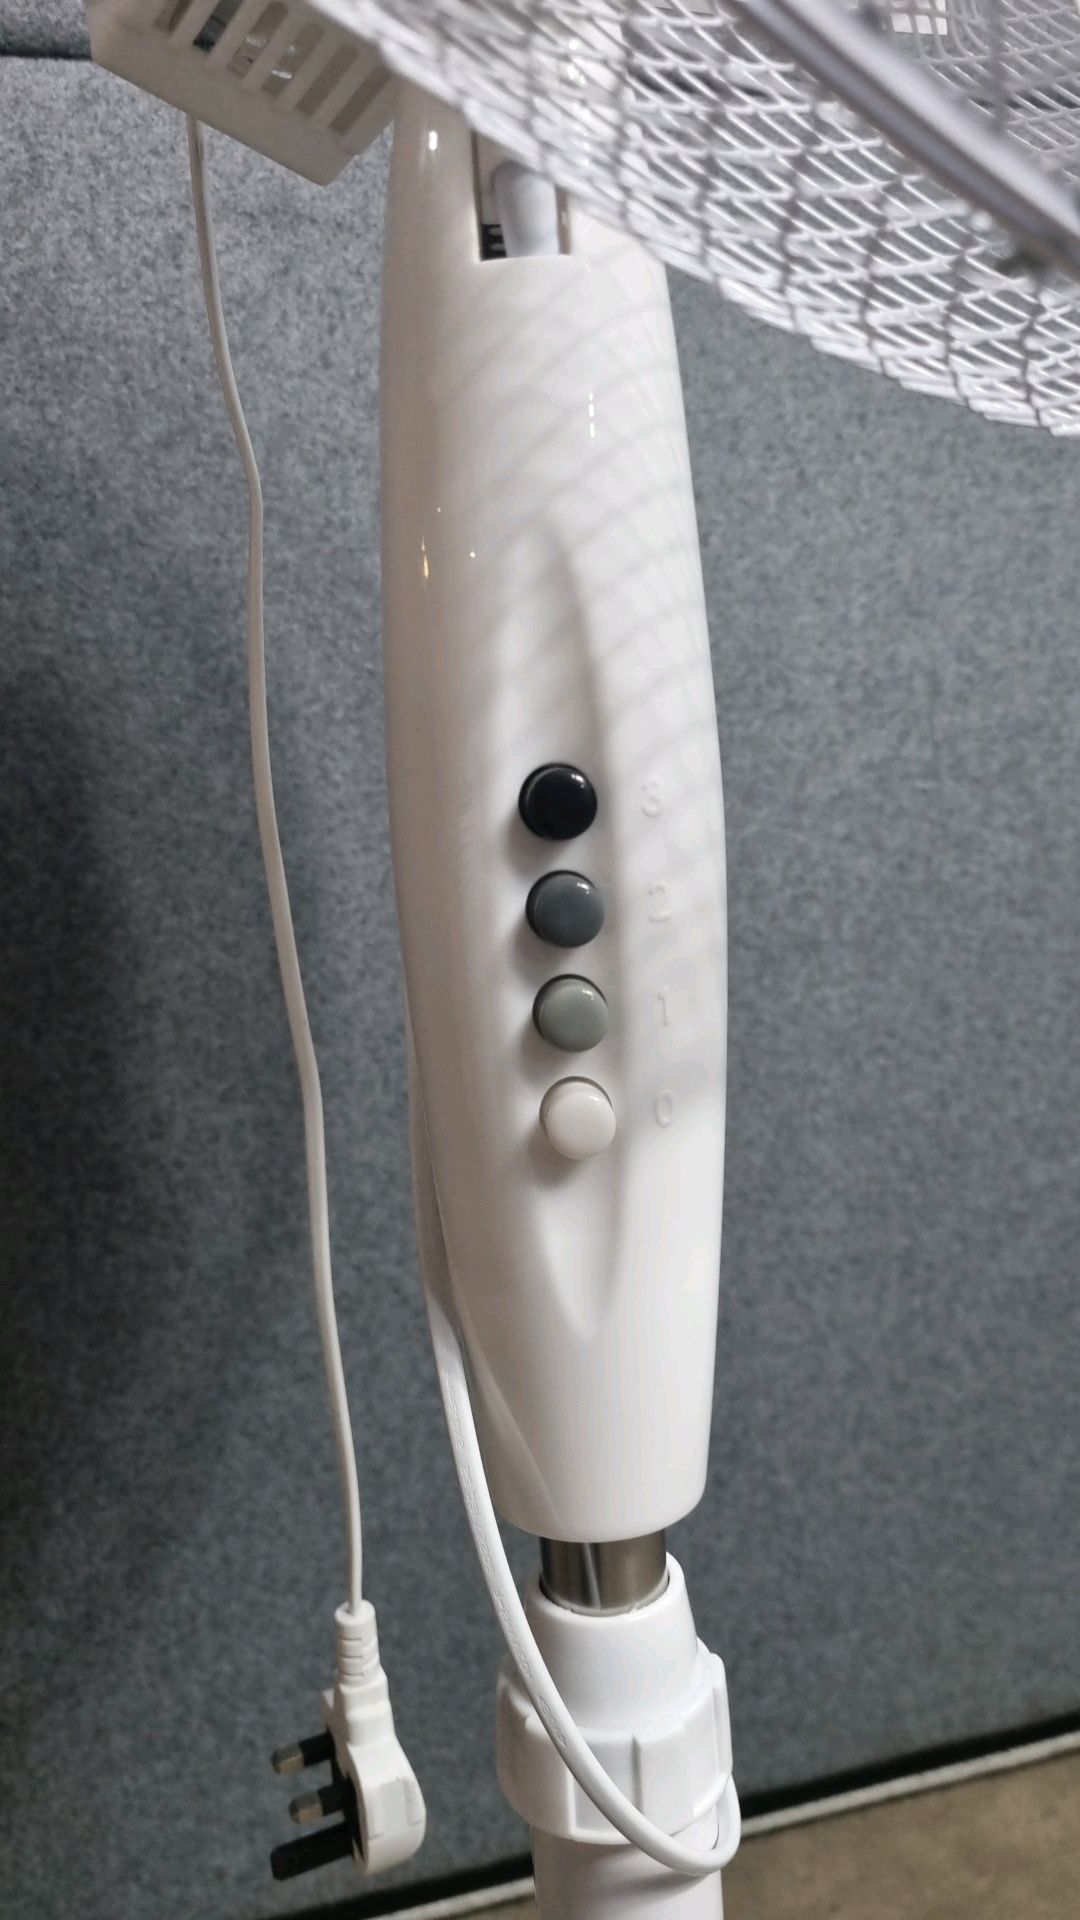 Electric Oscillating pedestal Cooling Fan - Image 2 of 3